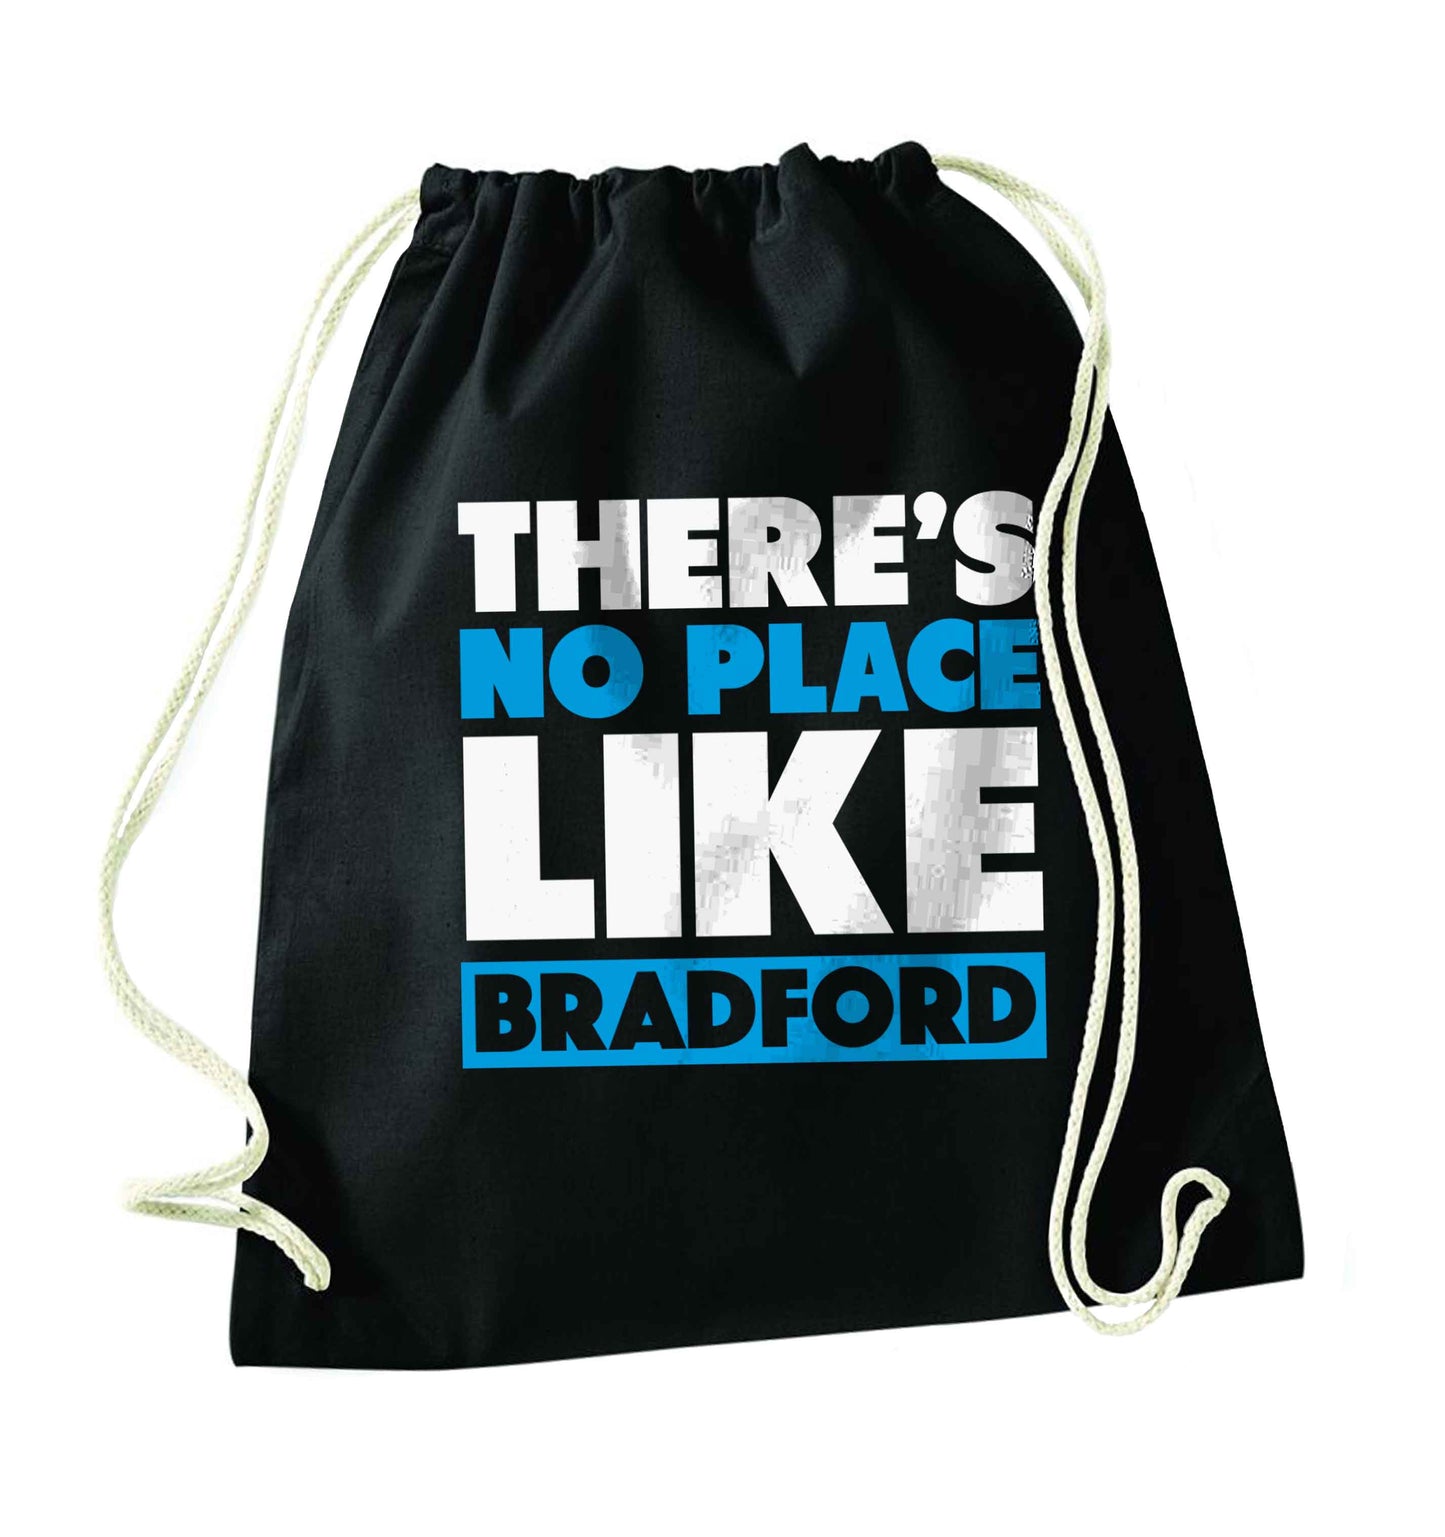 There's no place like Bradford black drawstring bag